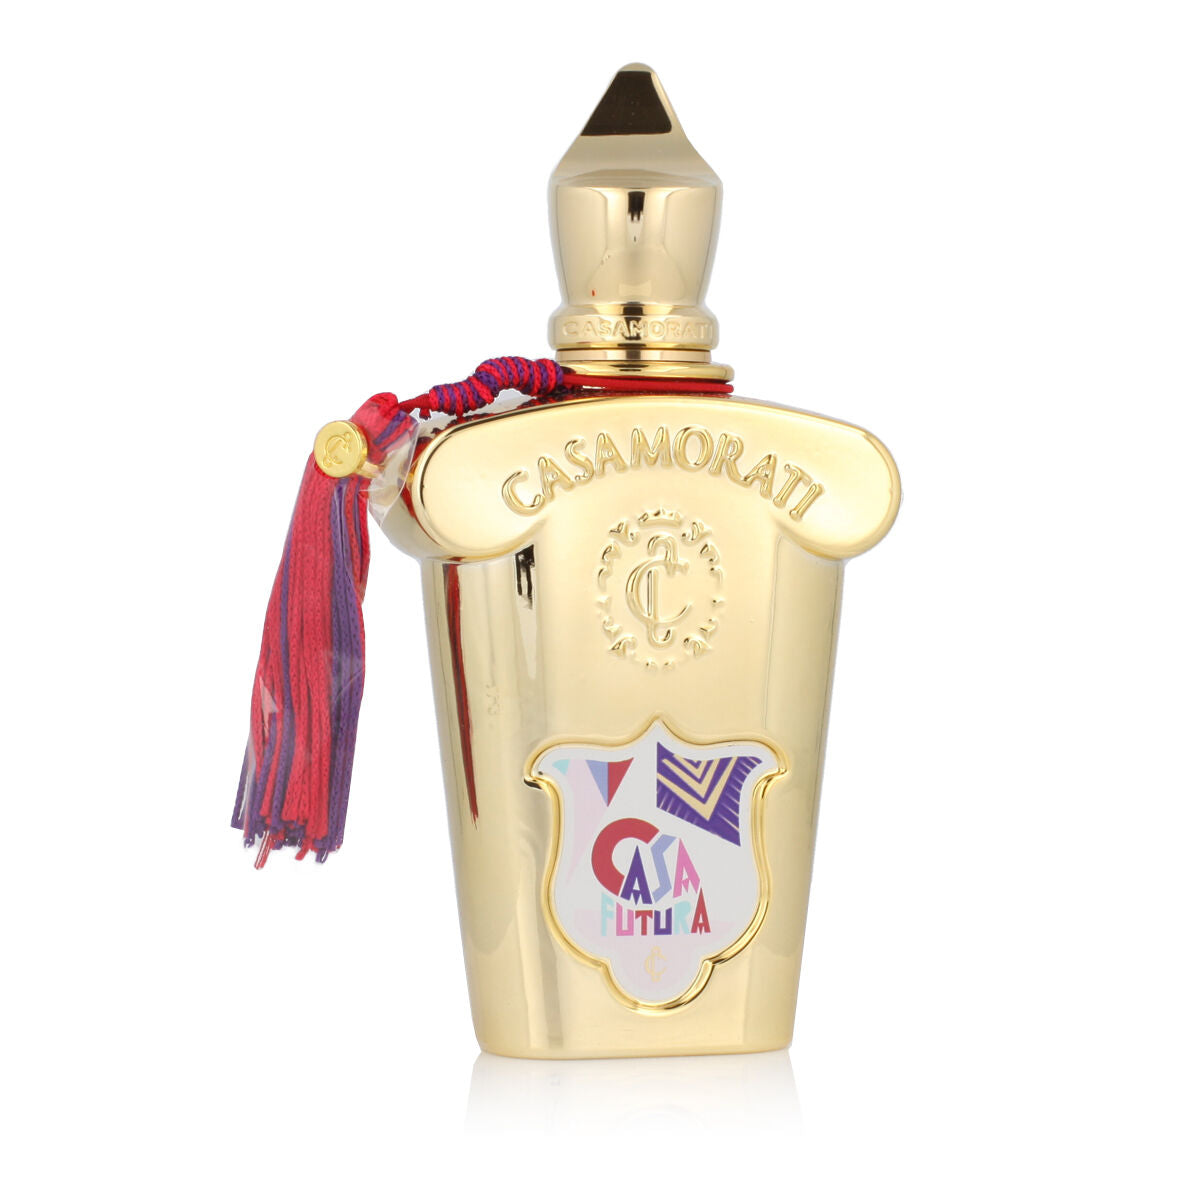 Kaufe Unisex-Parfüm Xerjoff EDP Casamorati 1888 Casafutura 100 ml bei AWK Flagship um € 188.00